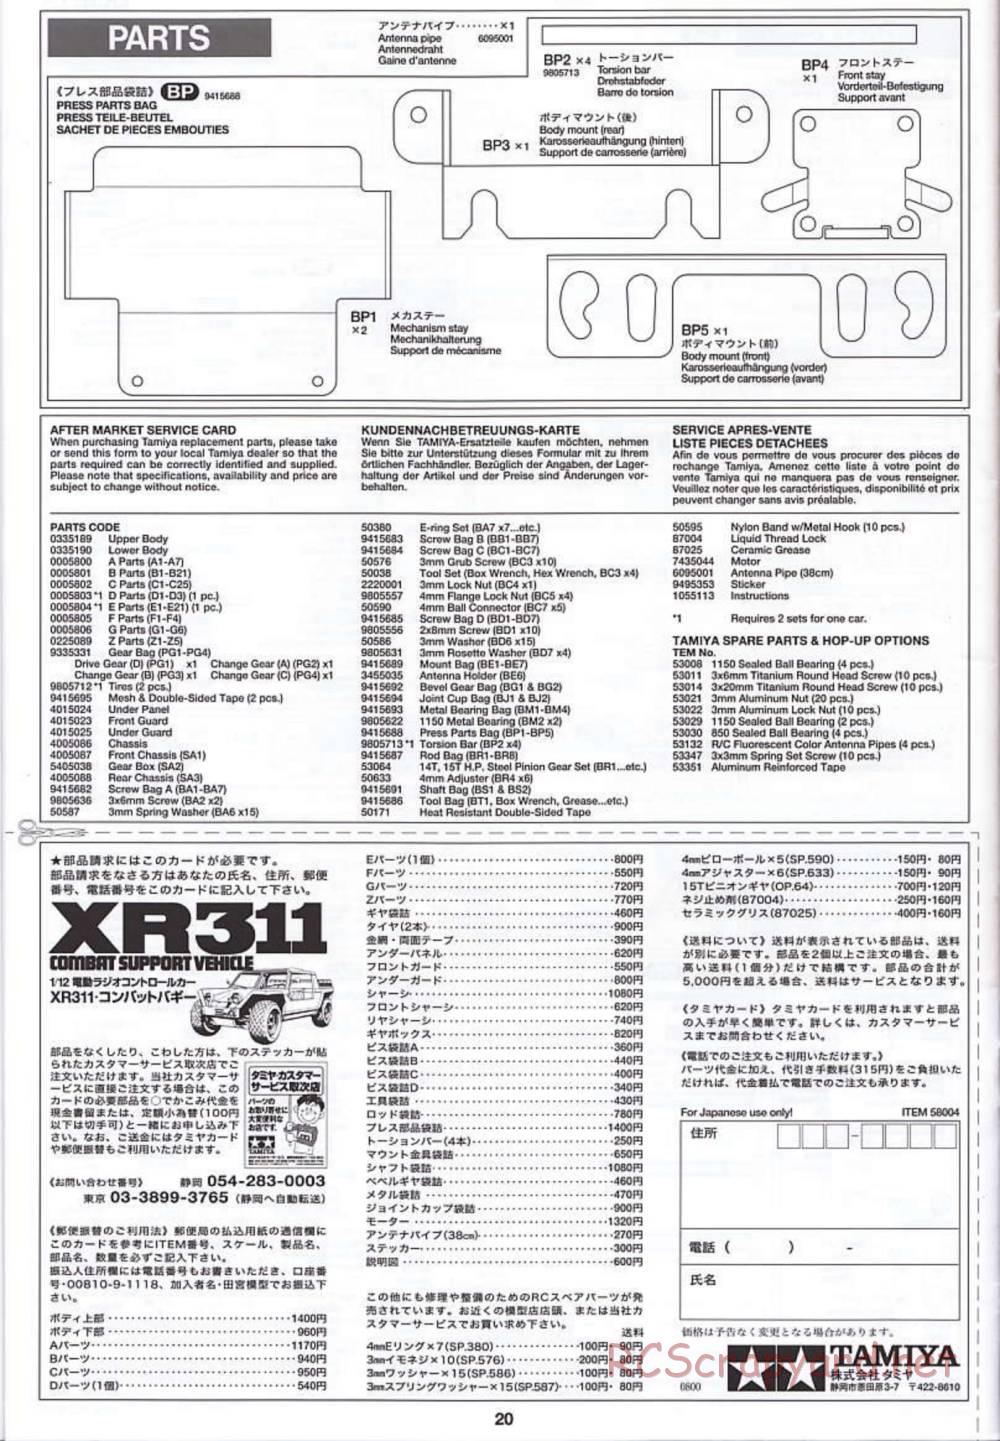 Tamiya - XR311 Combat Support Vehicle (2000) - 58004 - Manual - Page 21